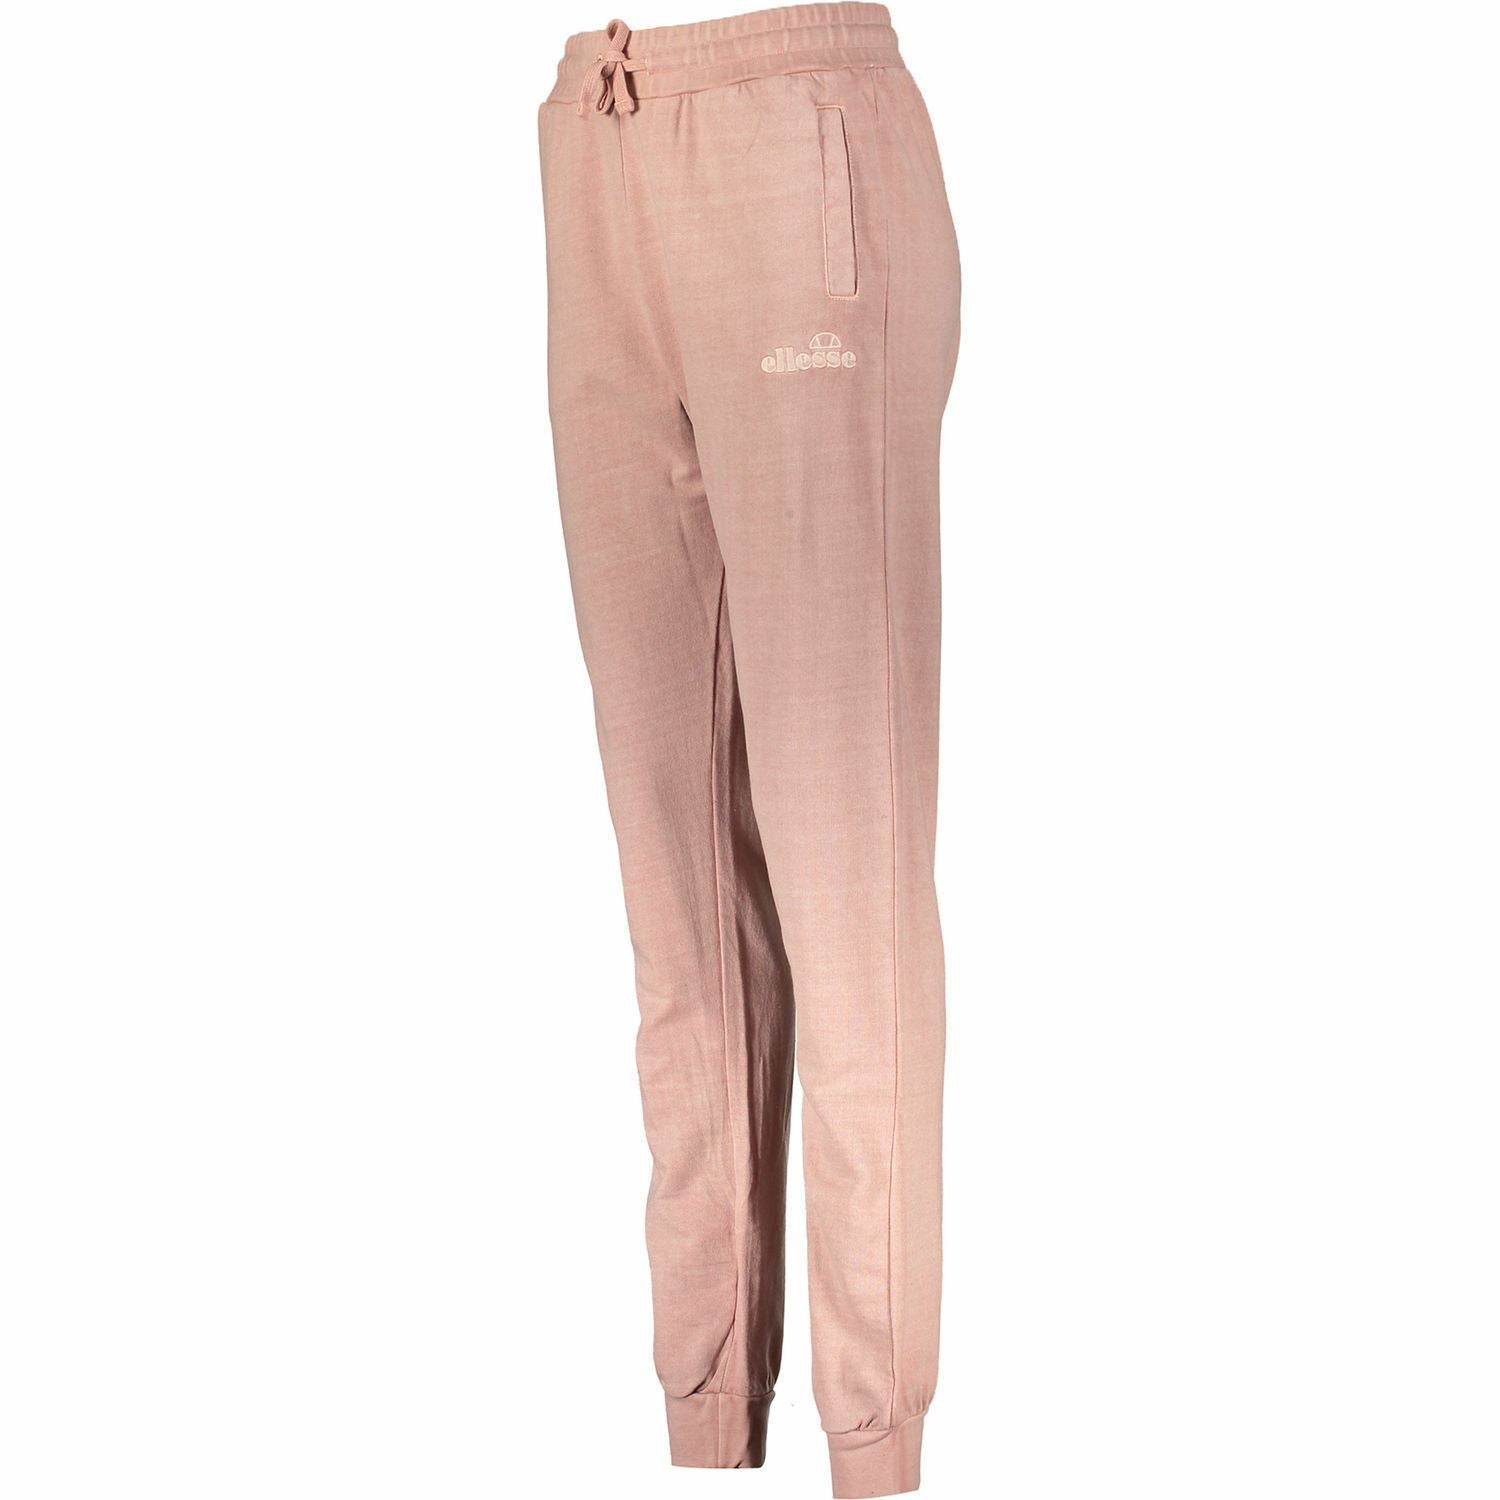 ELLESSE Women's SOFIA Jogging Bottoms Trousers  Pink Size Medium